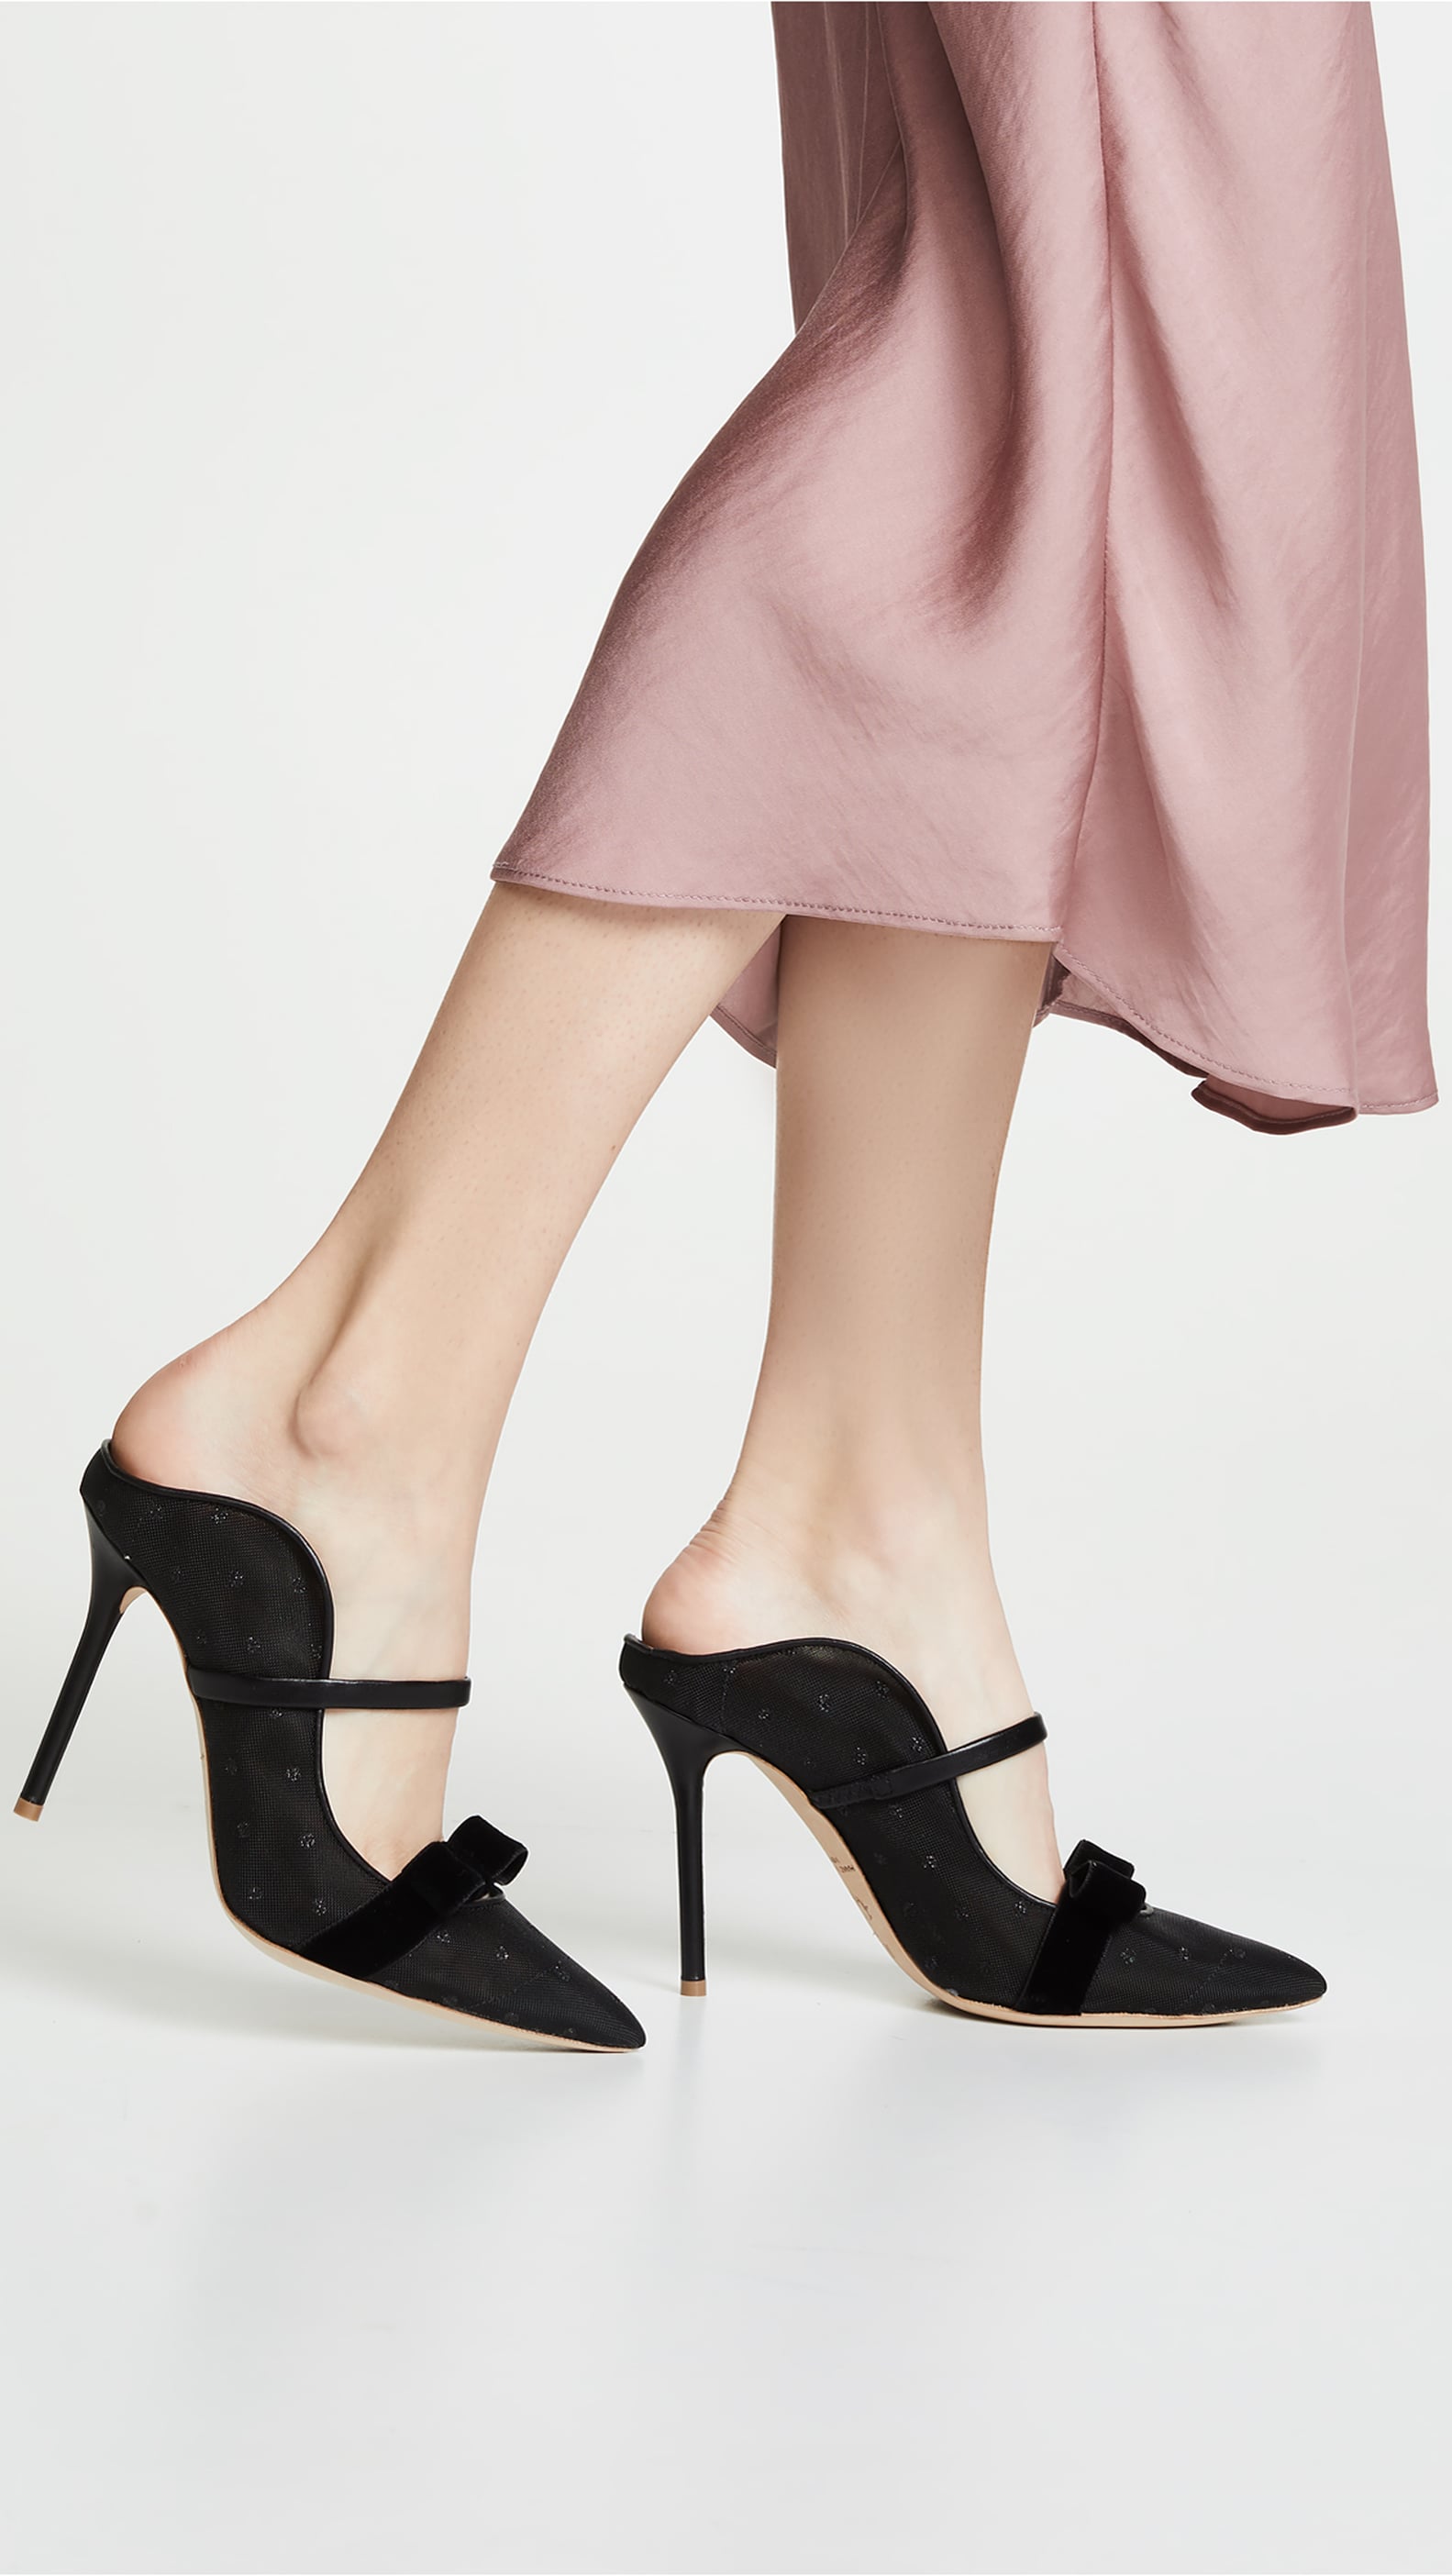 Sexy Heels 2019 | POPSUGAR Fashion